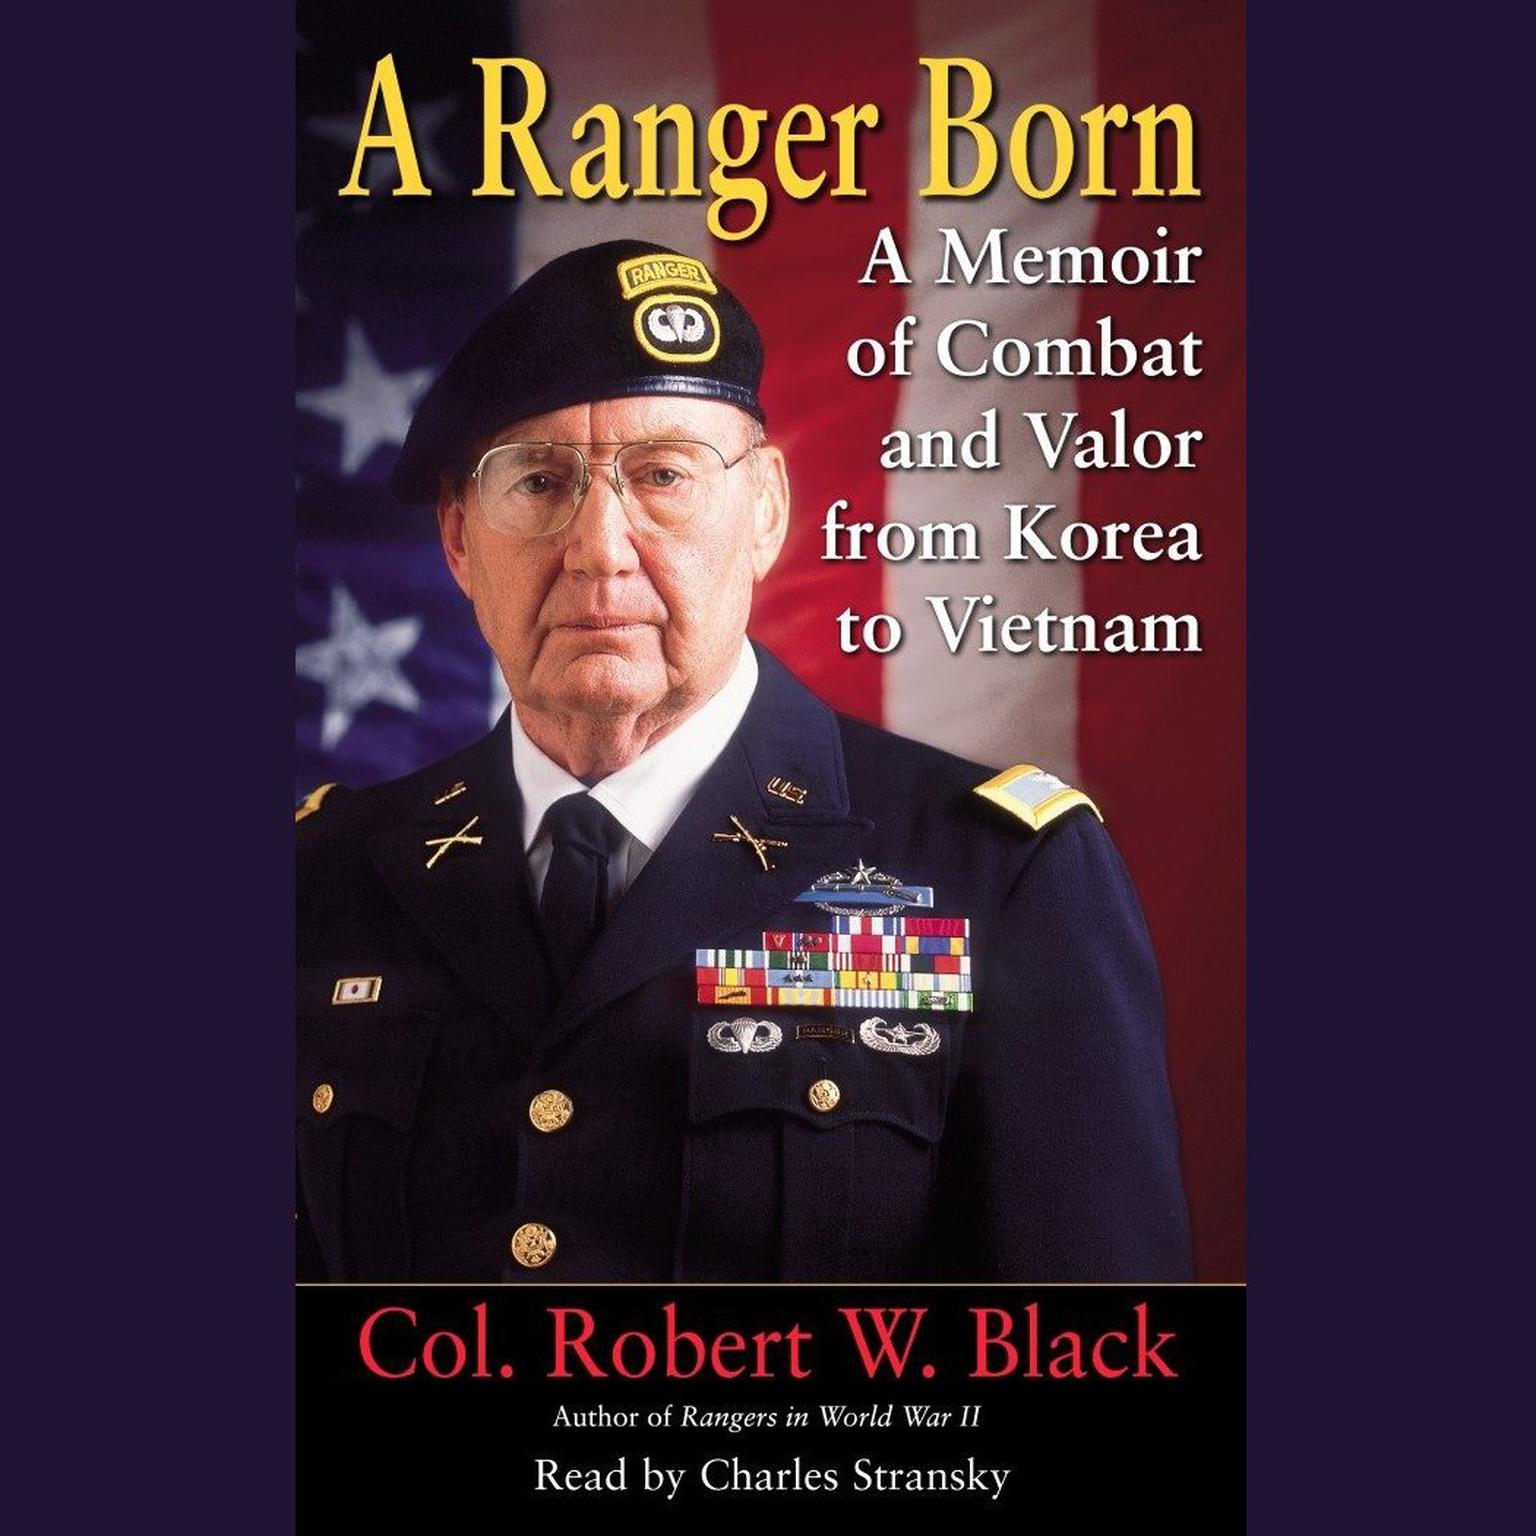 A Ranger Born (Abridged): A Memoir of Combat and Valor from Korea to Vietnam Audiobook, by Robert W. Black